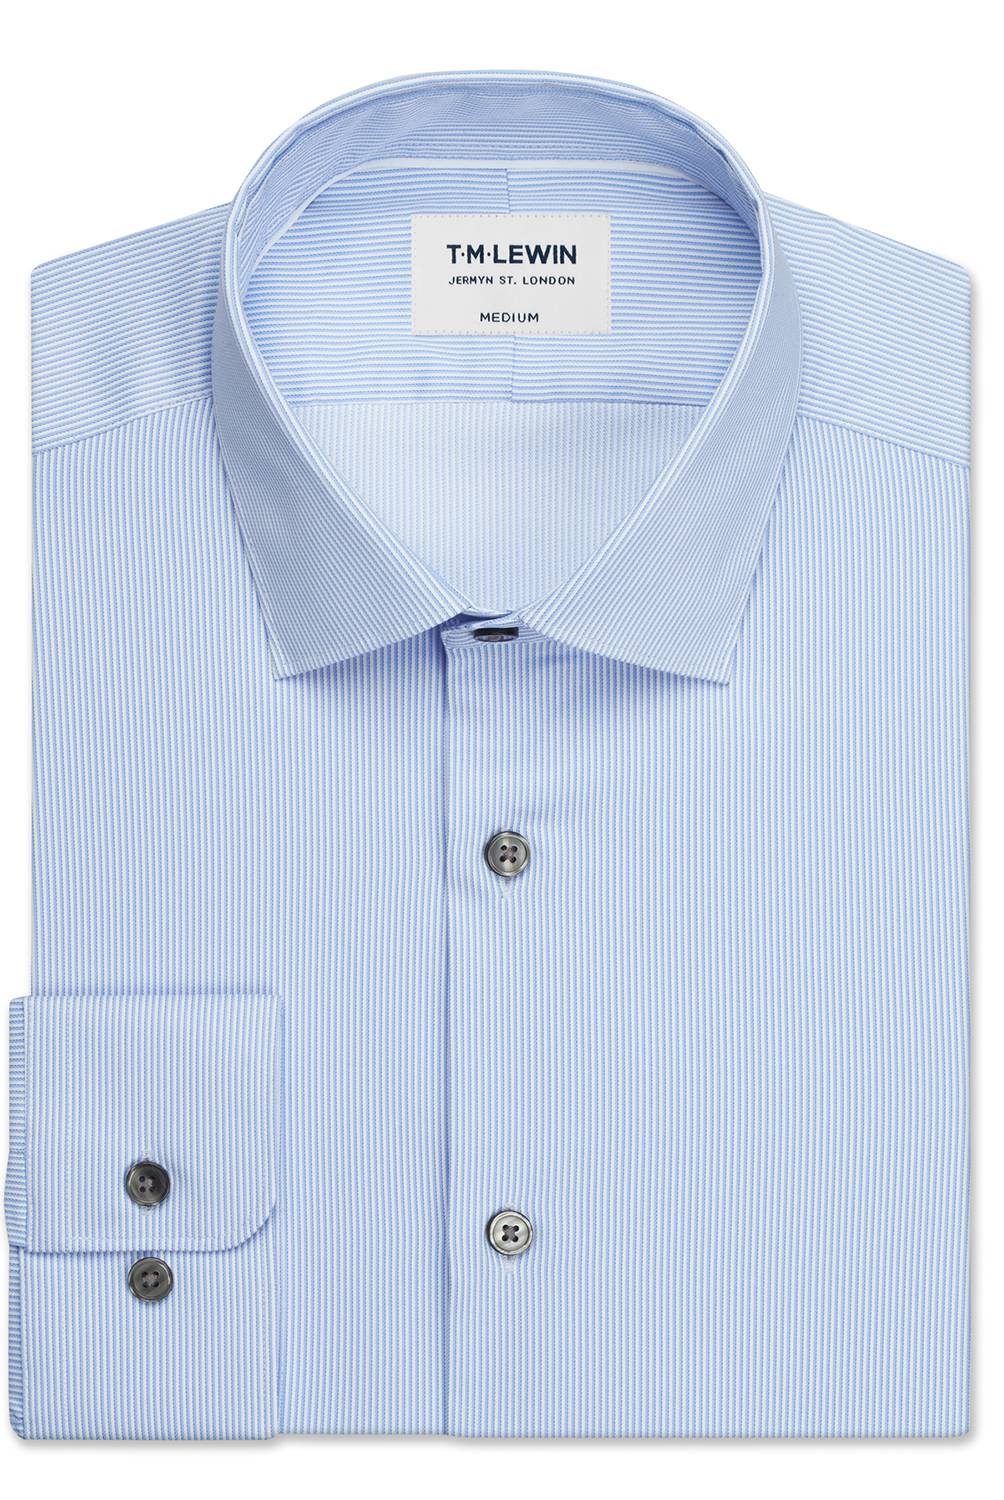 TM LEWIN - Camisa de vestir Hombre